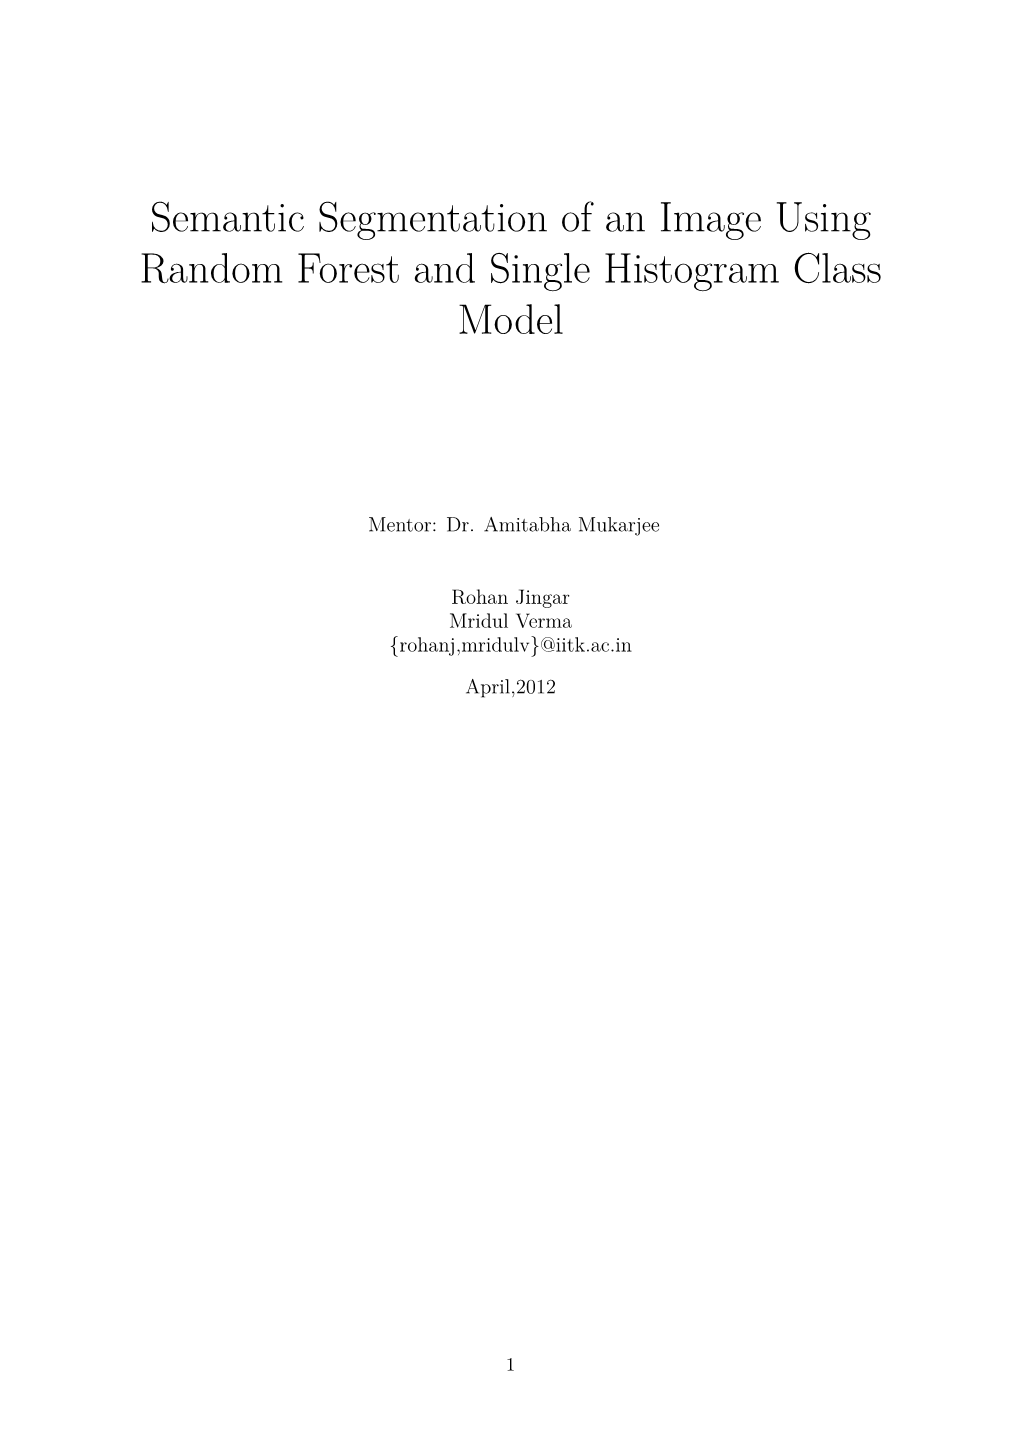 Semantic Segmentation of an Image Using Random Forest and Single Histogram Class Model